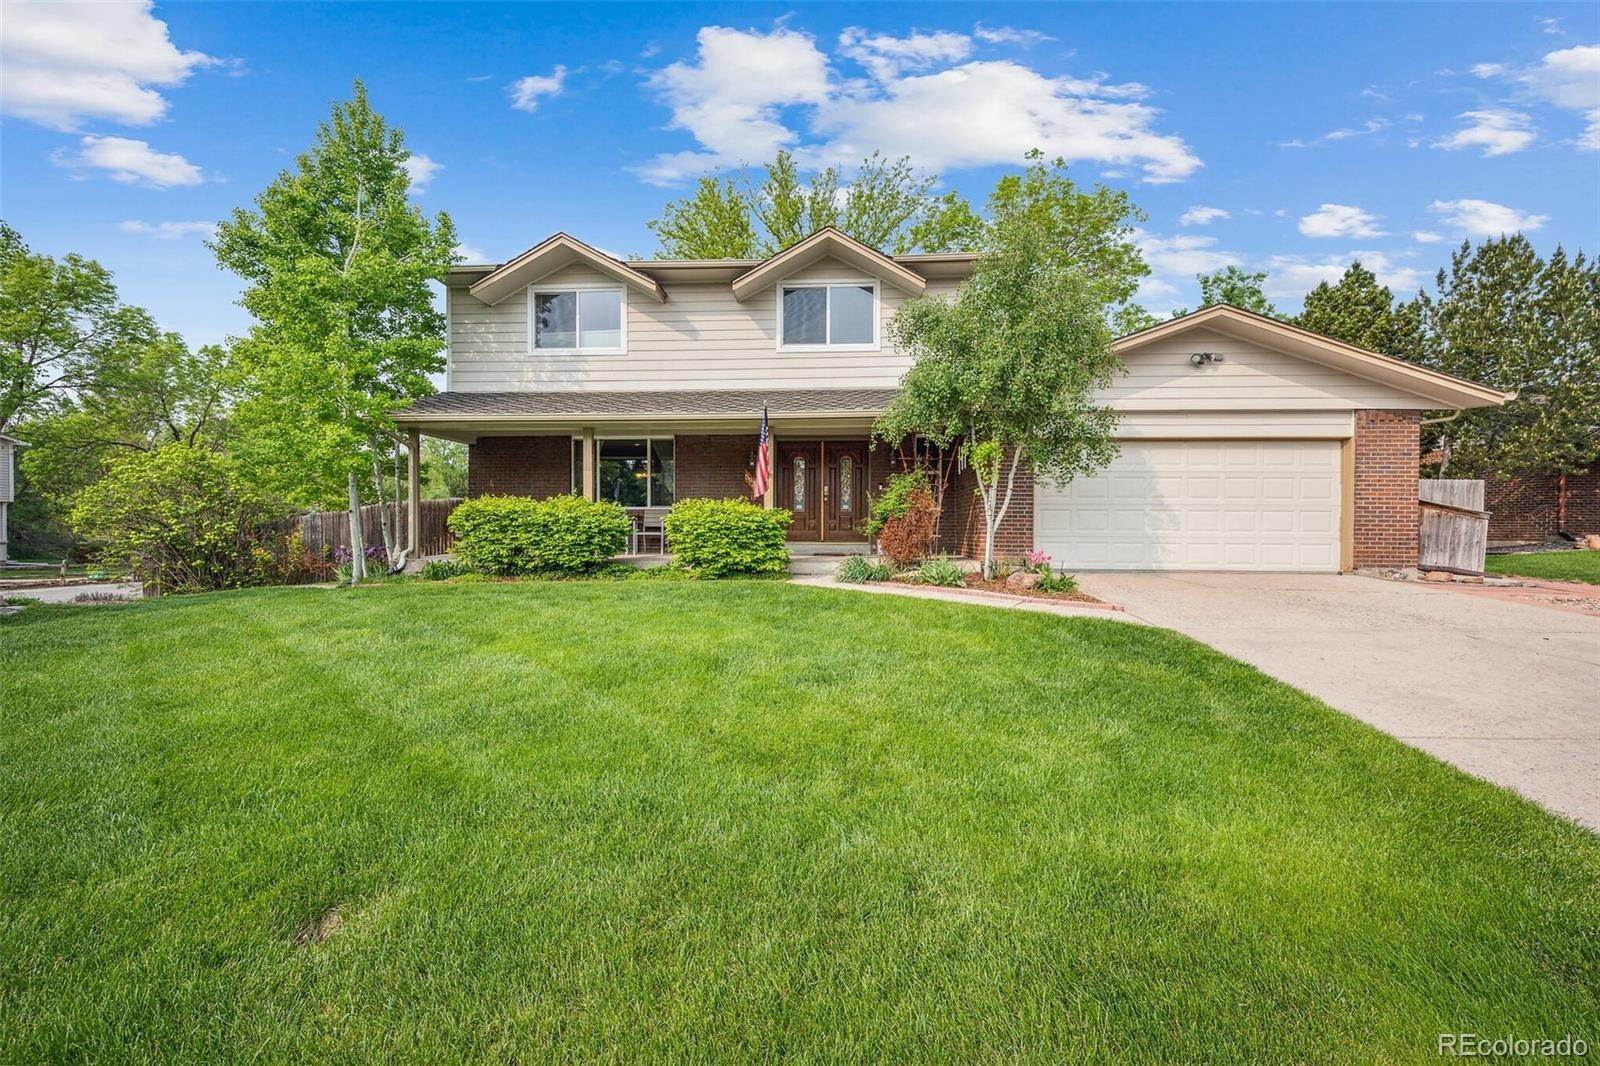 1. Single Family Homes for Sale at 5931 S Niagara Street Centennial, Colorado 80111 United States